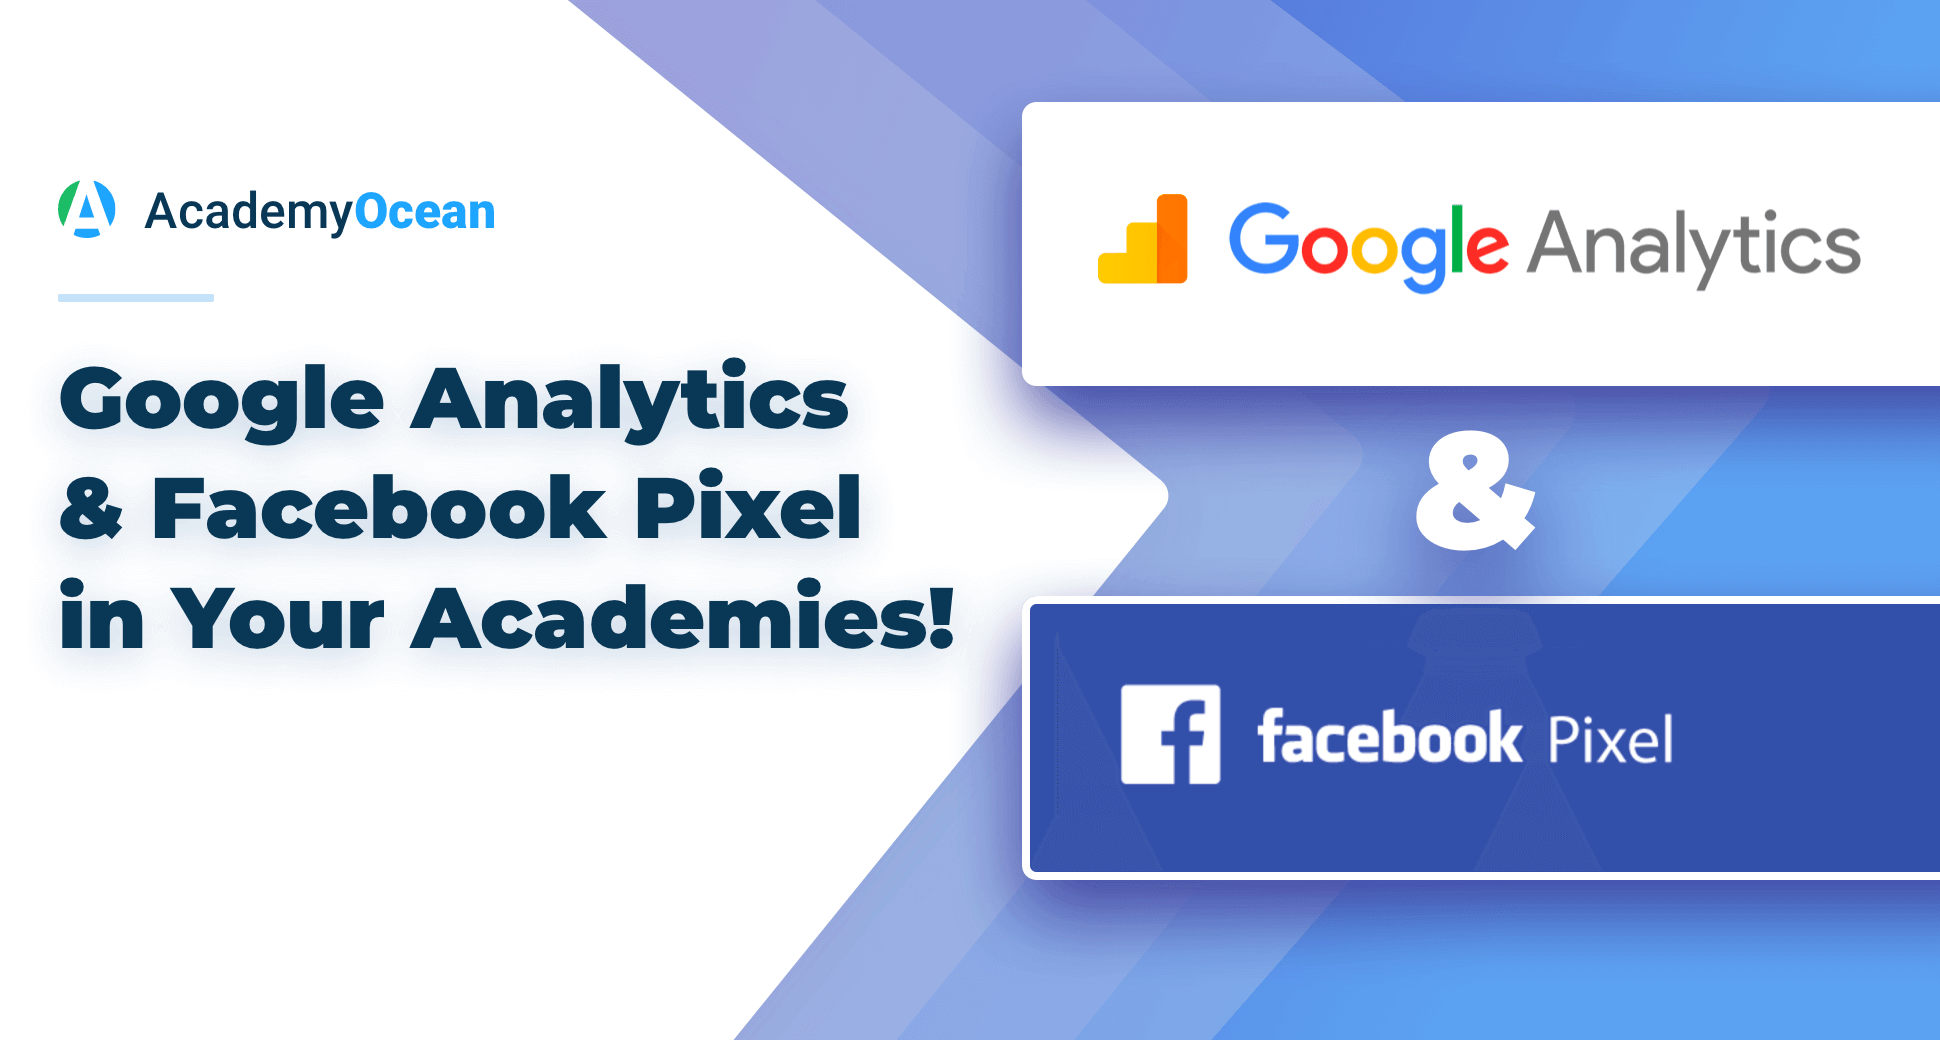 Facebook Pixel And Google Analytics logos